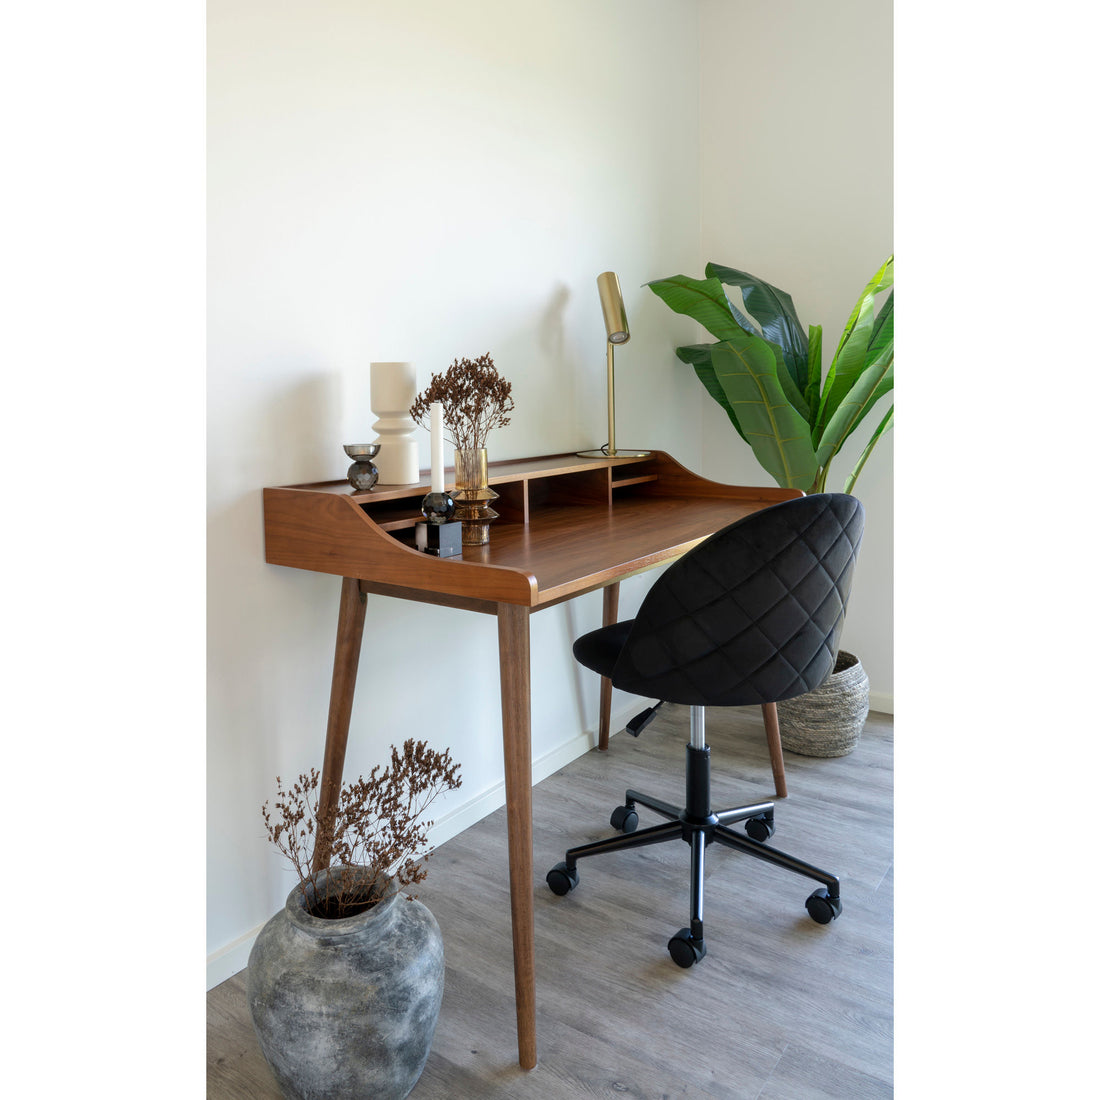 Hellerup Desk - Desk i Walnut Veneer - 1 - PCS